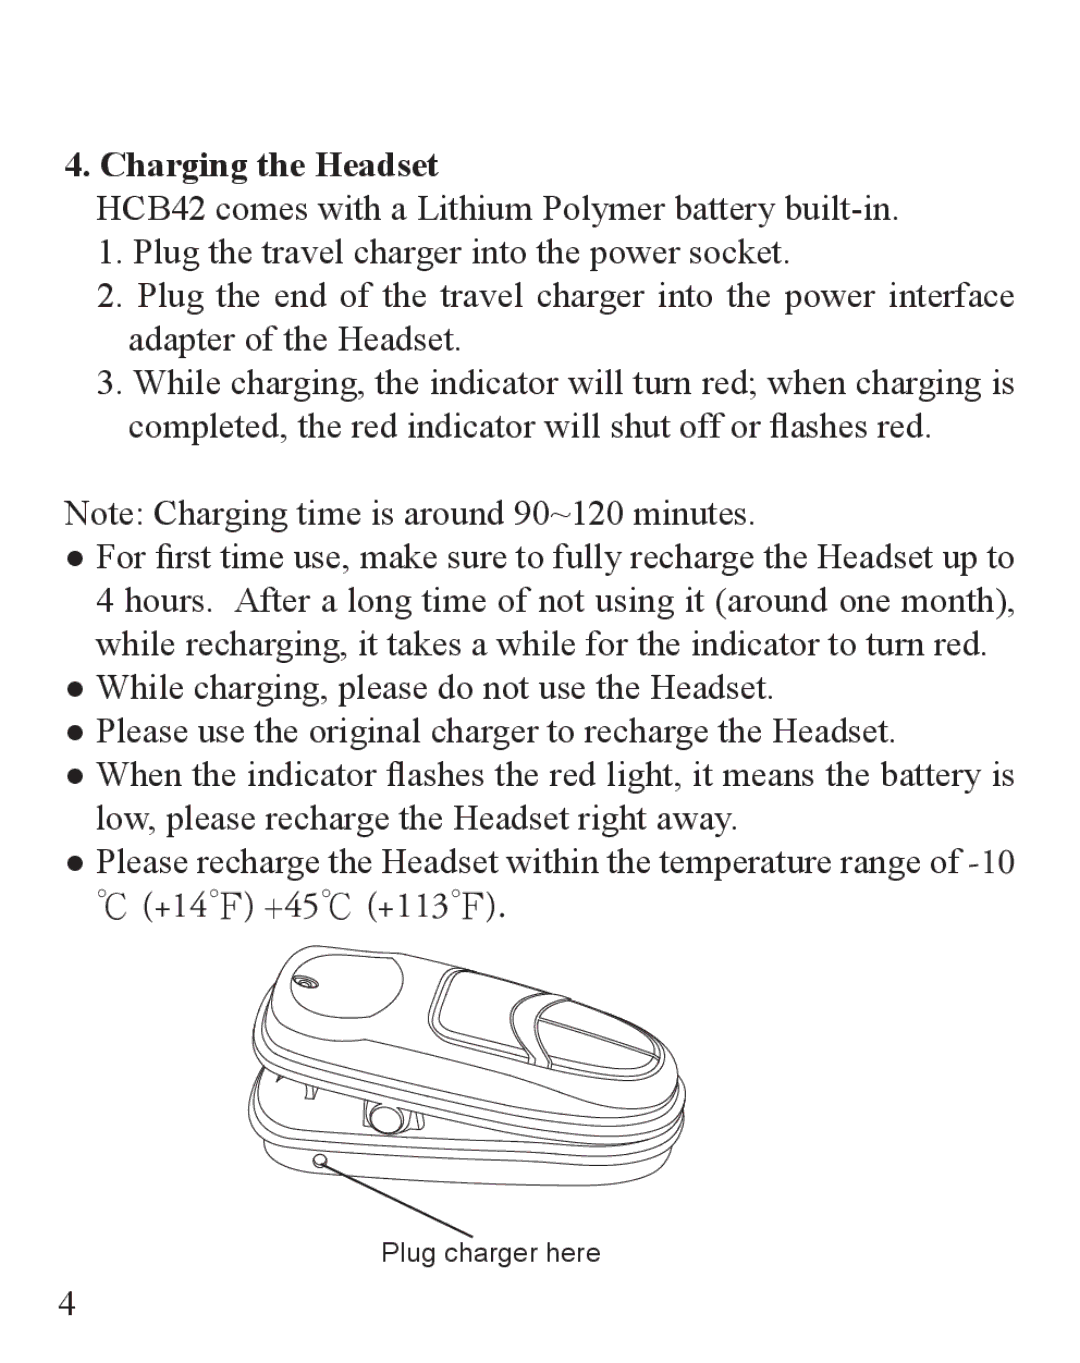 Huey Chiao HCB42 manual Charging the Headset 